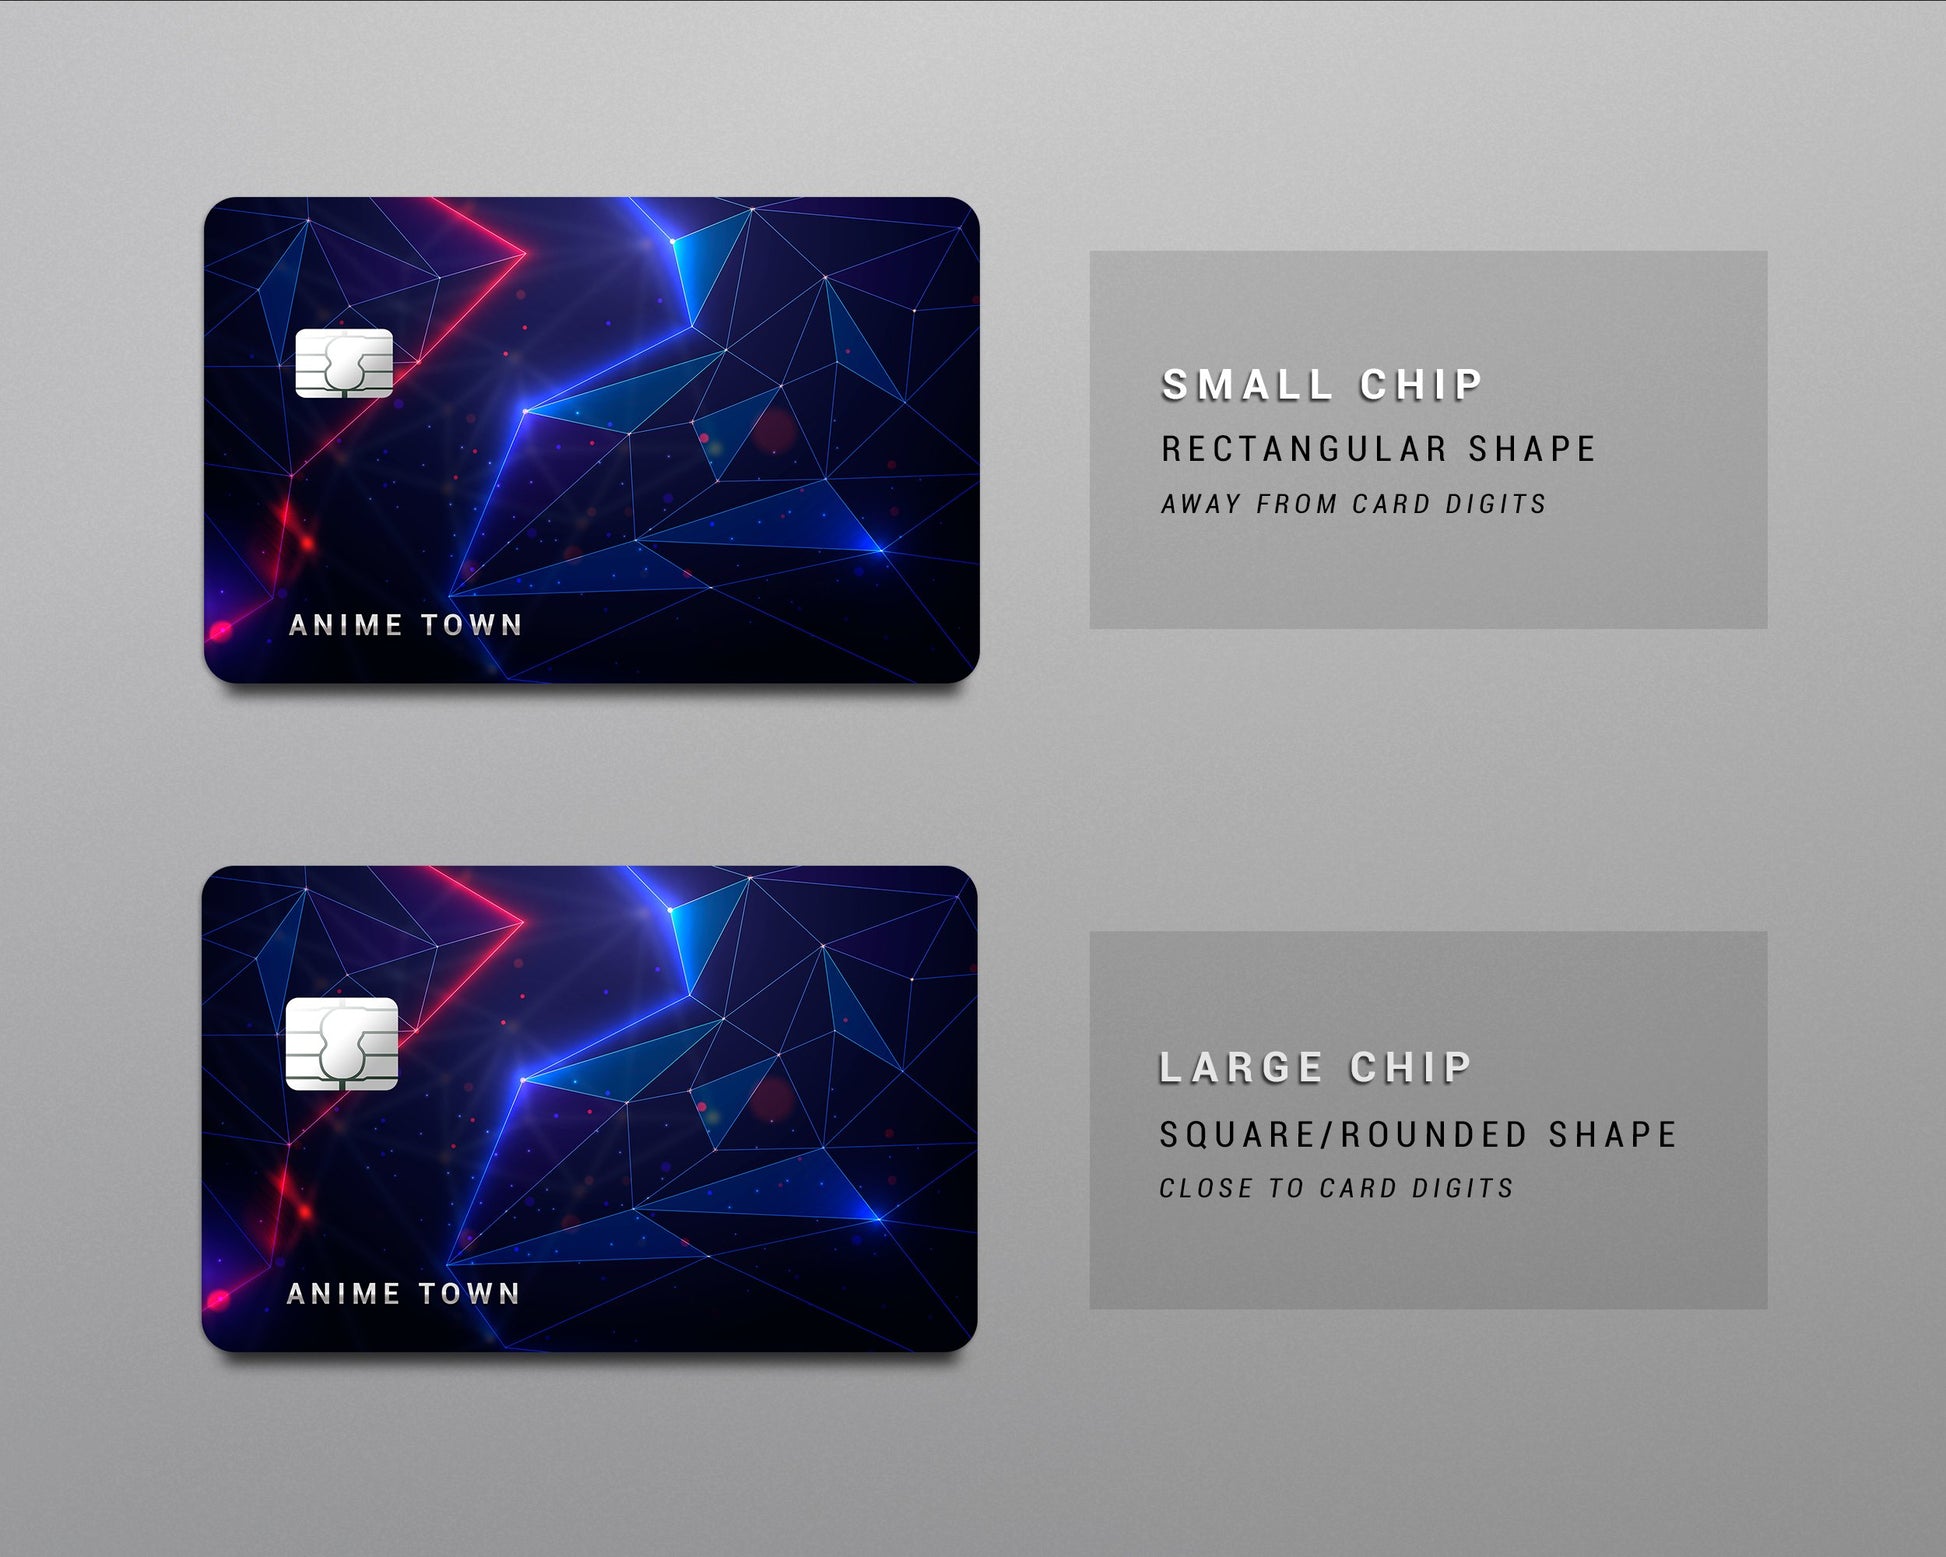 custom credit card backgrounds